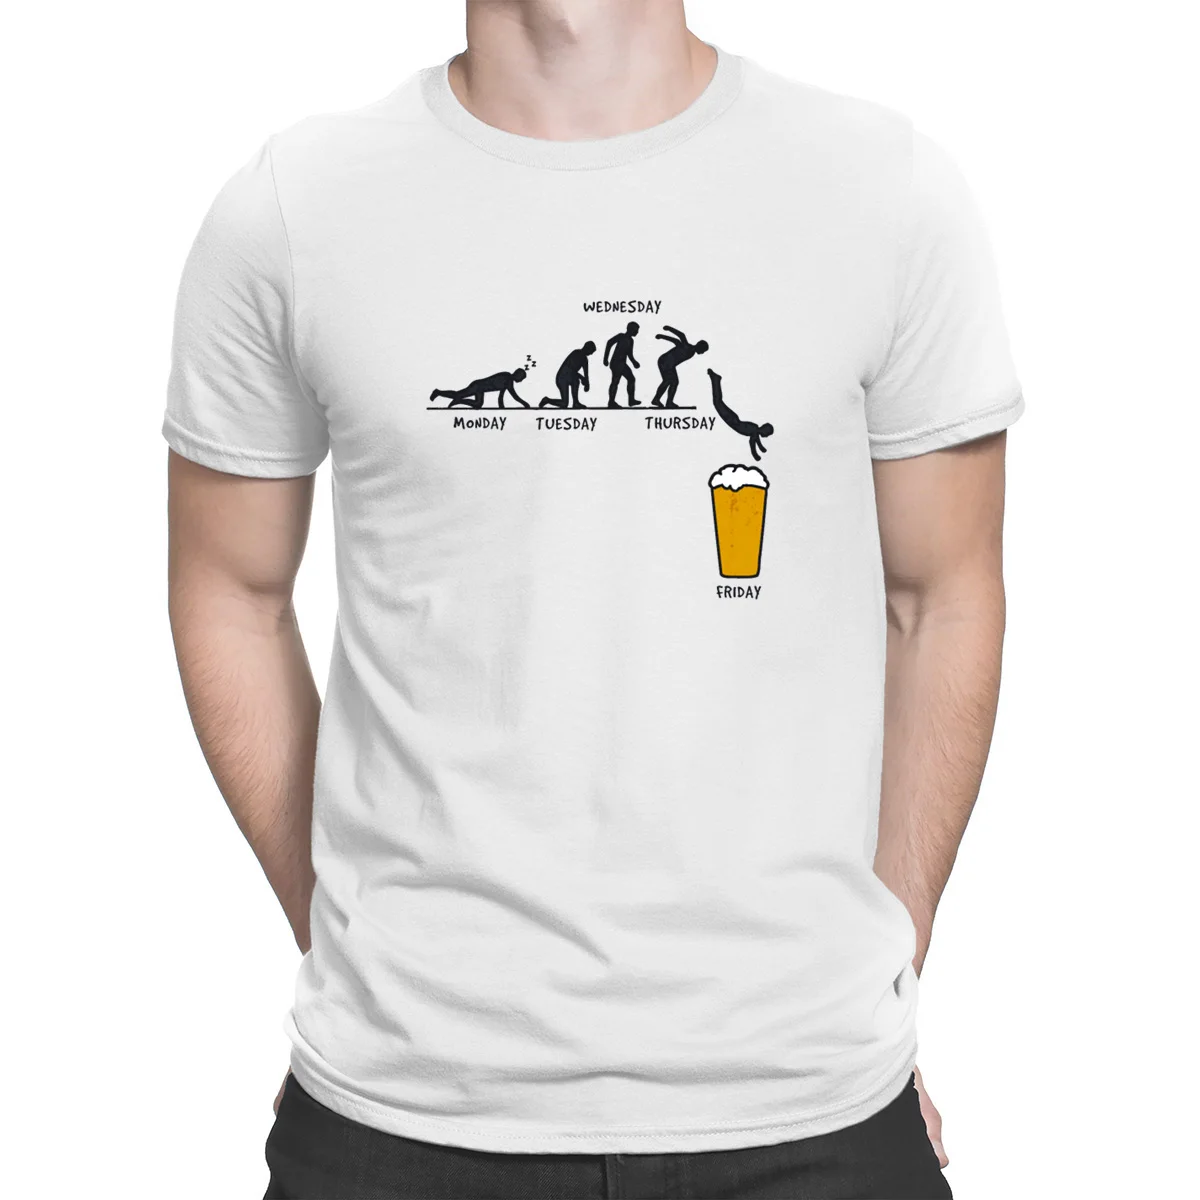 Week Craft Beer дизайнерская забавная Футболка Евро размер Формальная креативная футболка для мужчин сплошной цвет хип-хоп комическая футболка Funky - Цвет: White